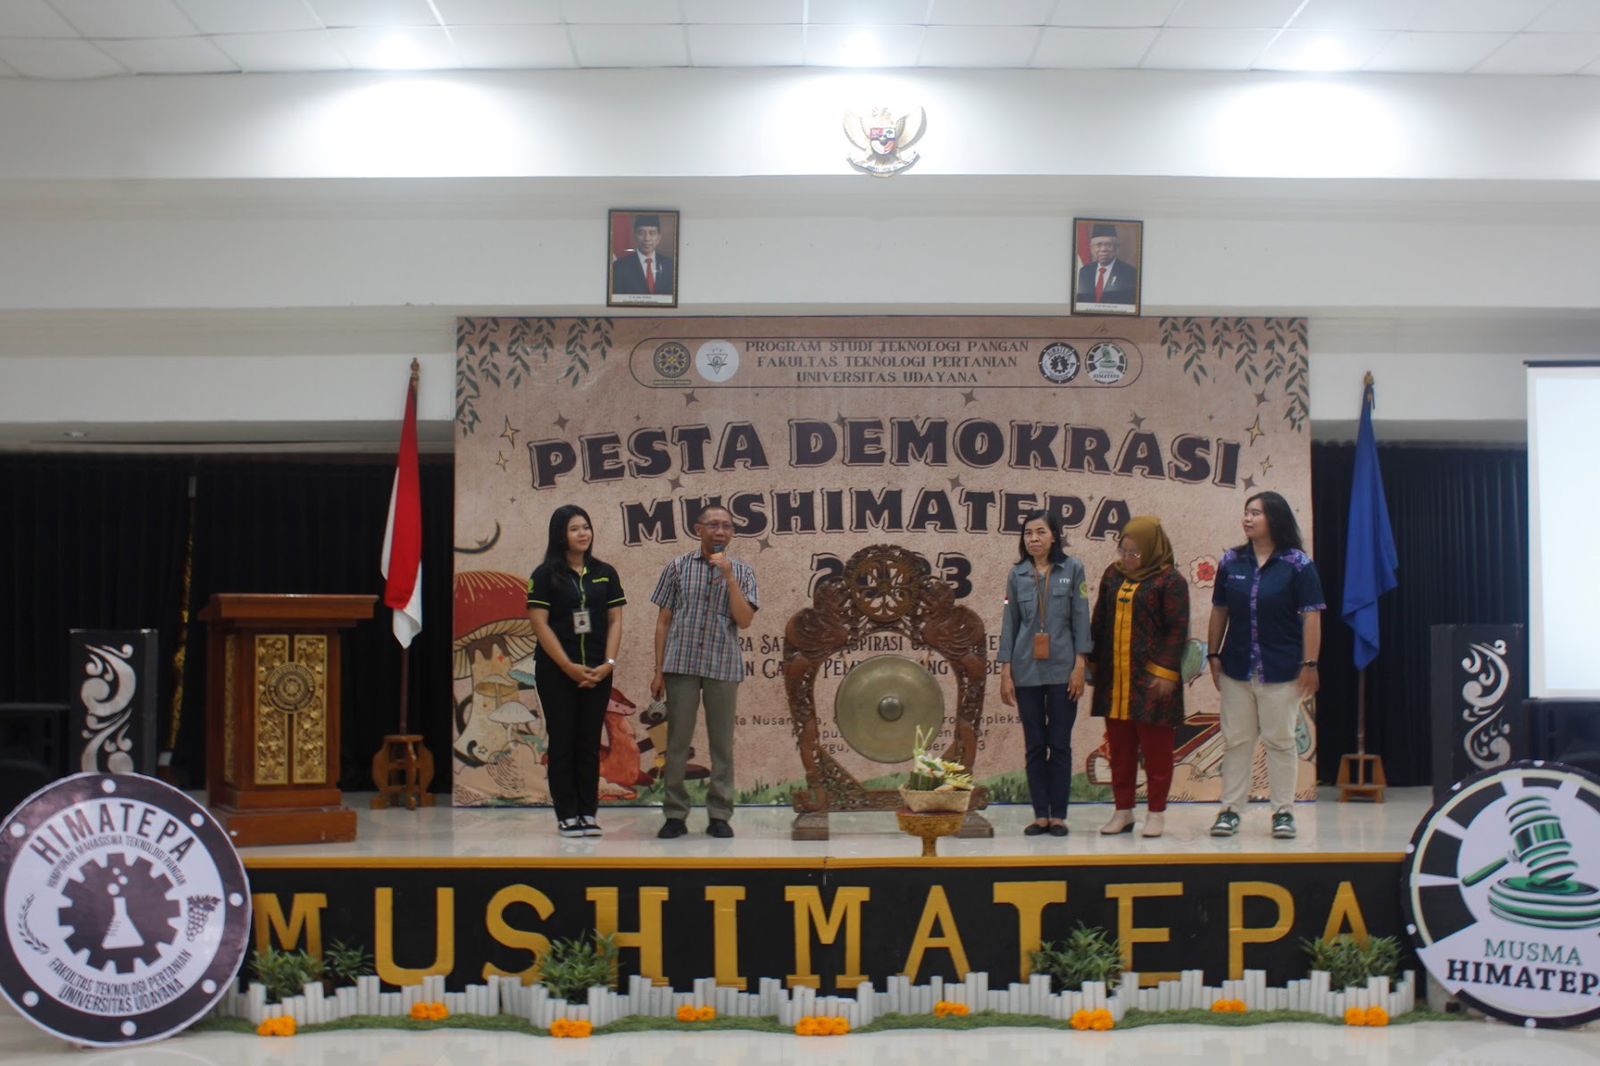 Preparing to Choose a New Leader, Himatepa Unud Holds Mushimaitepa